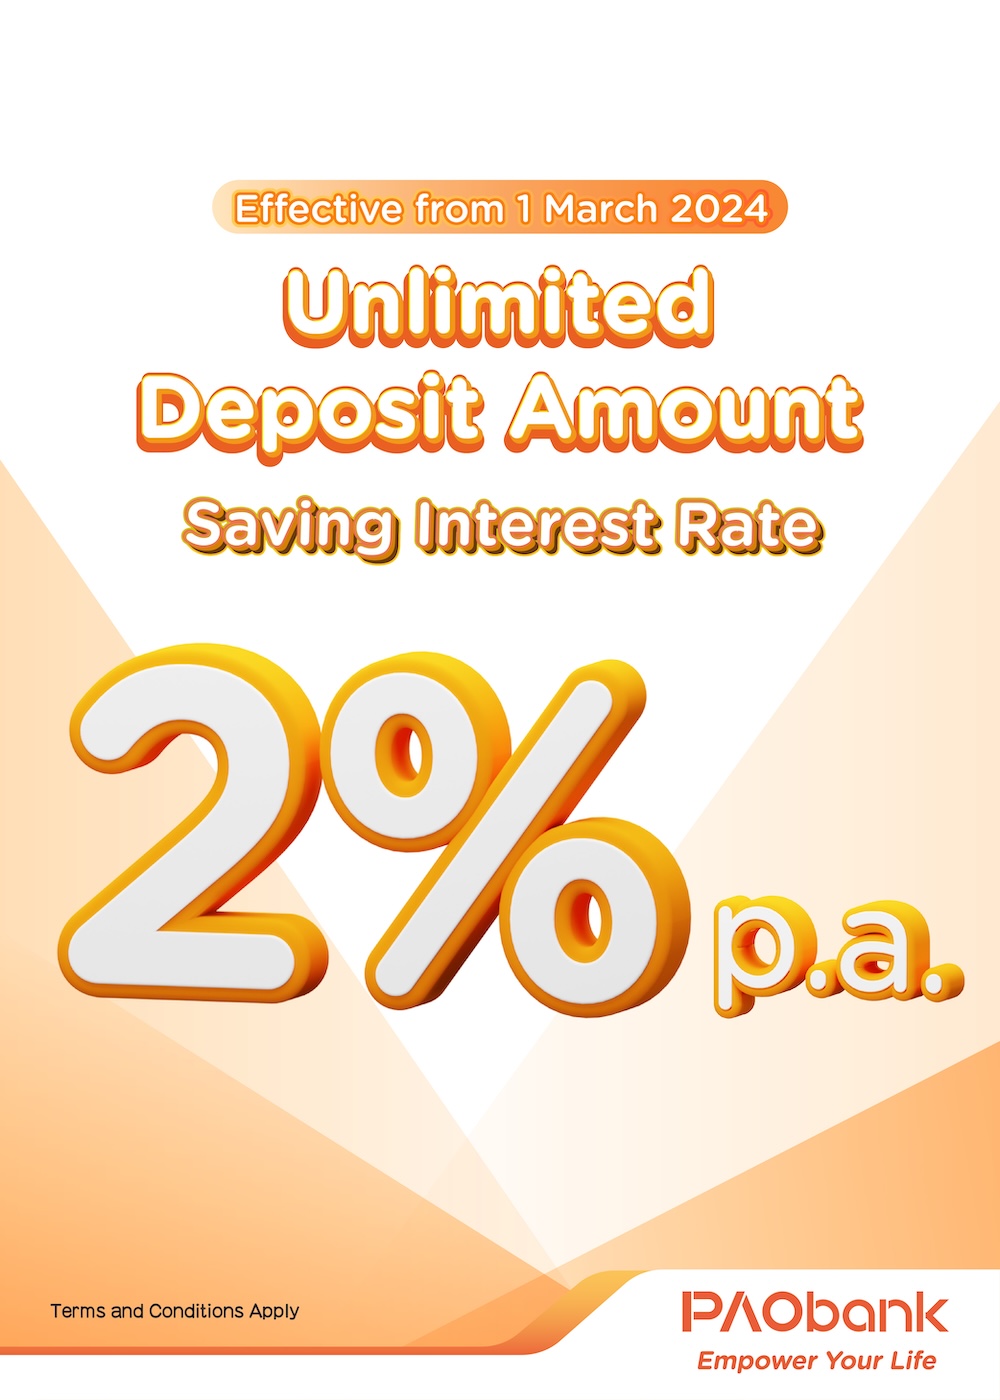 PAObank - Unlimited Deposit Amount